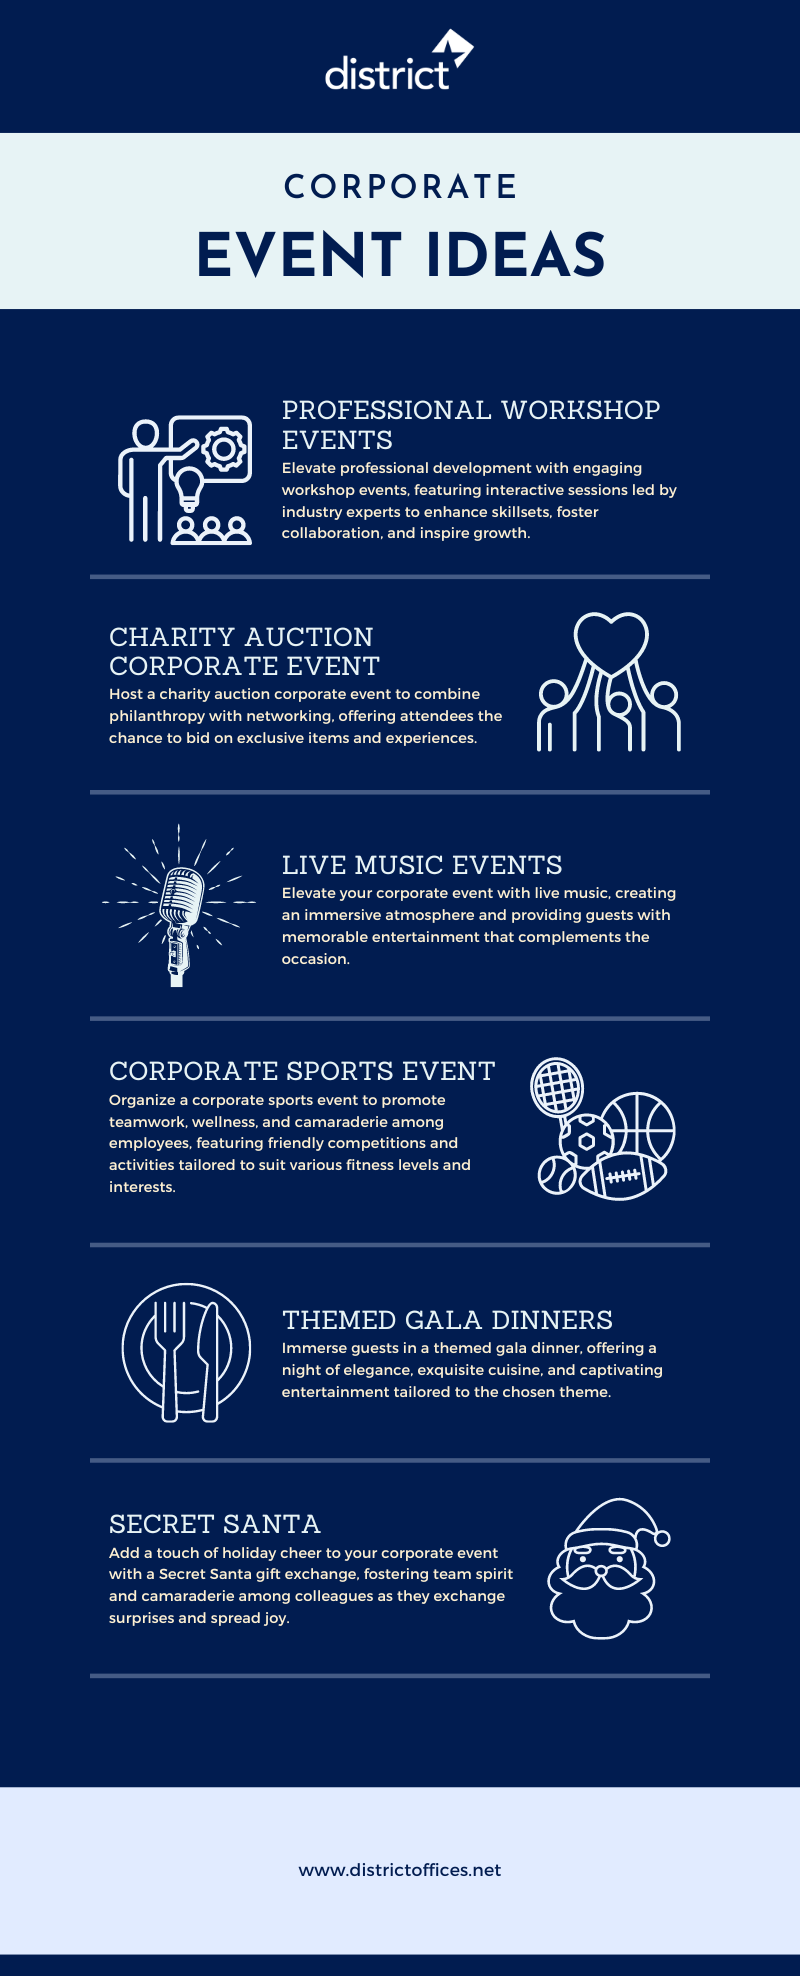 corporate event ideas infographic